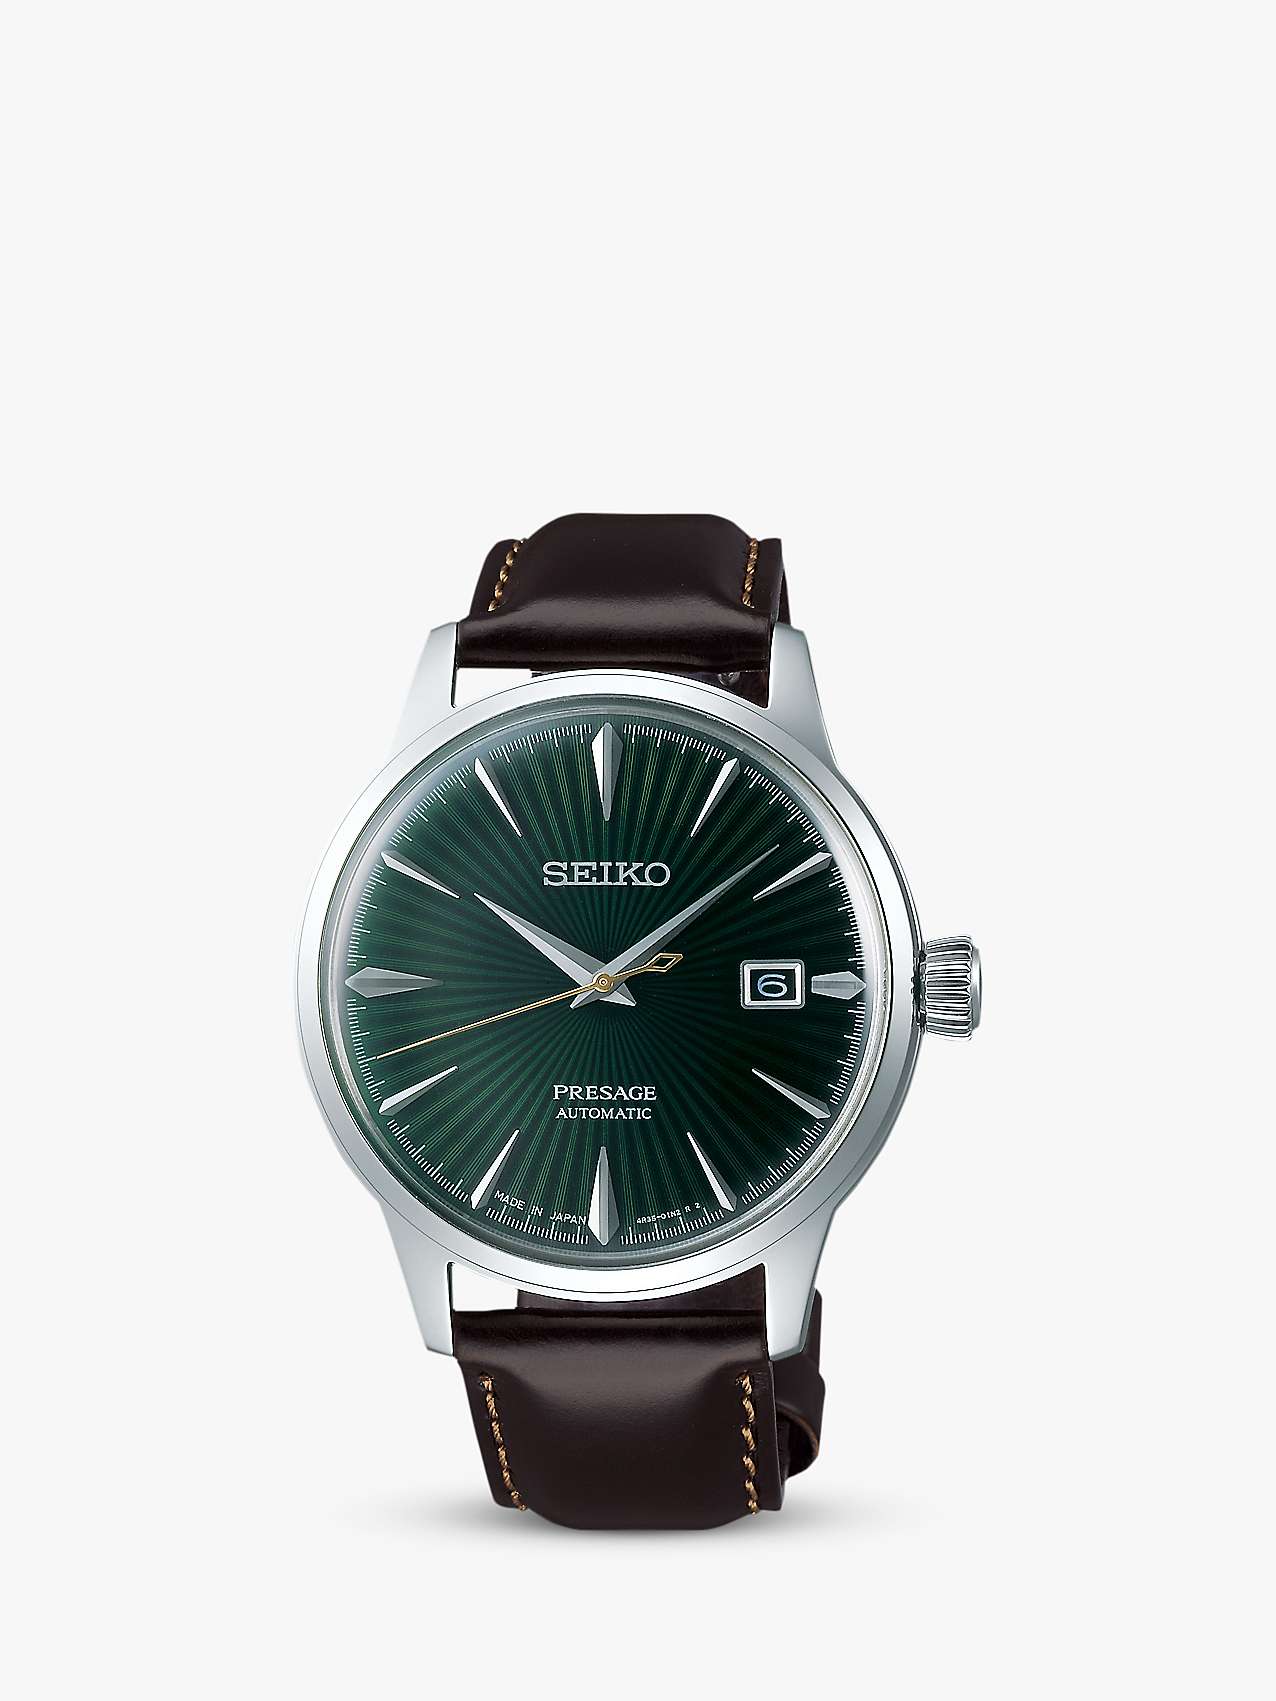 Seiko Men's Presage Automatic Date Leather Strap Watch, Black/Green  SRPD37J1 at John Lewis & Partners